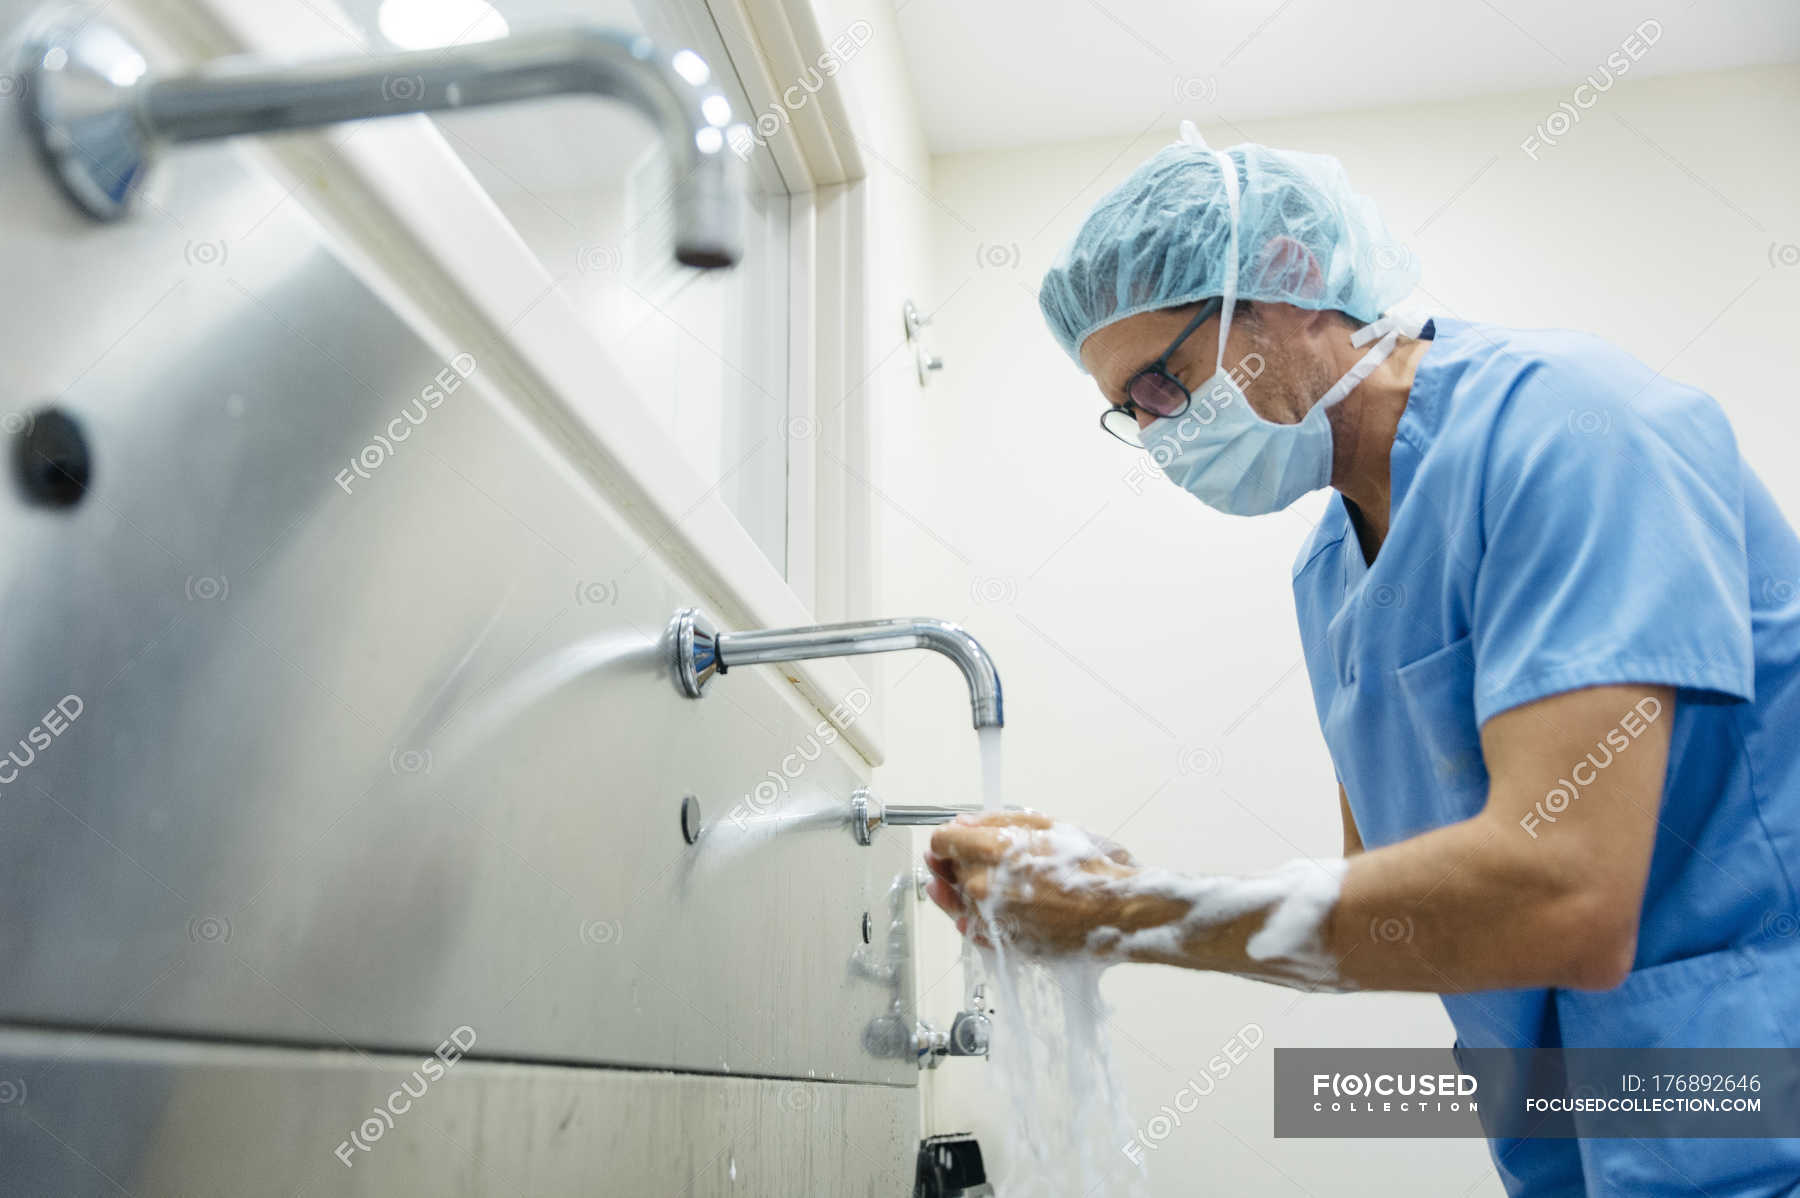 Подготовка хирурга к операции. Мытье рук хирурга перед операцией. Подготовка рук хирурга к операции. Хирургическая мойка рук. Хирург обрабатывает руки.